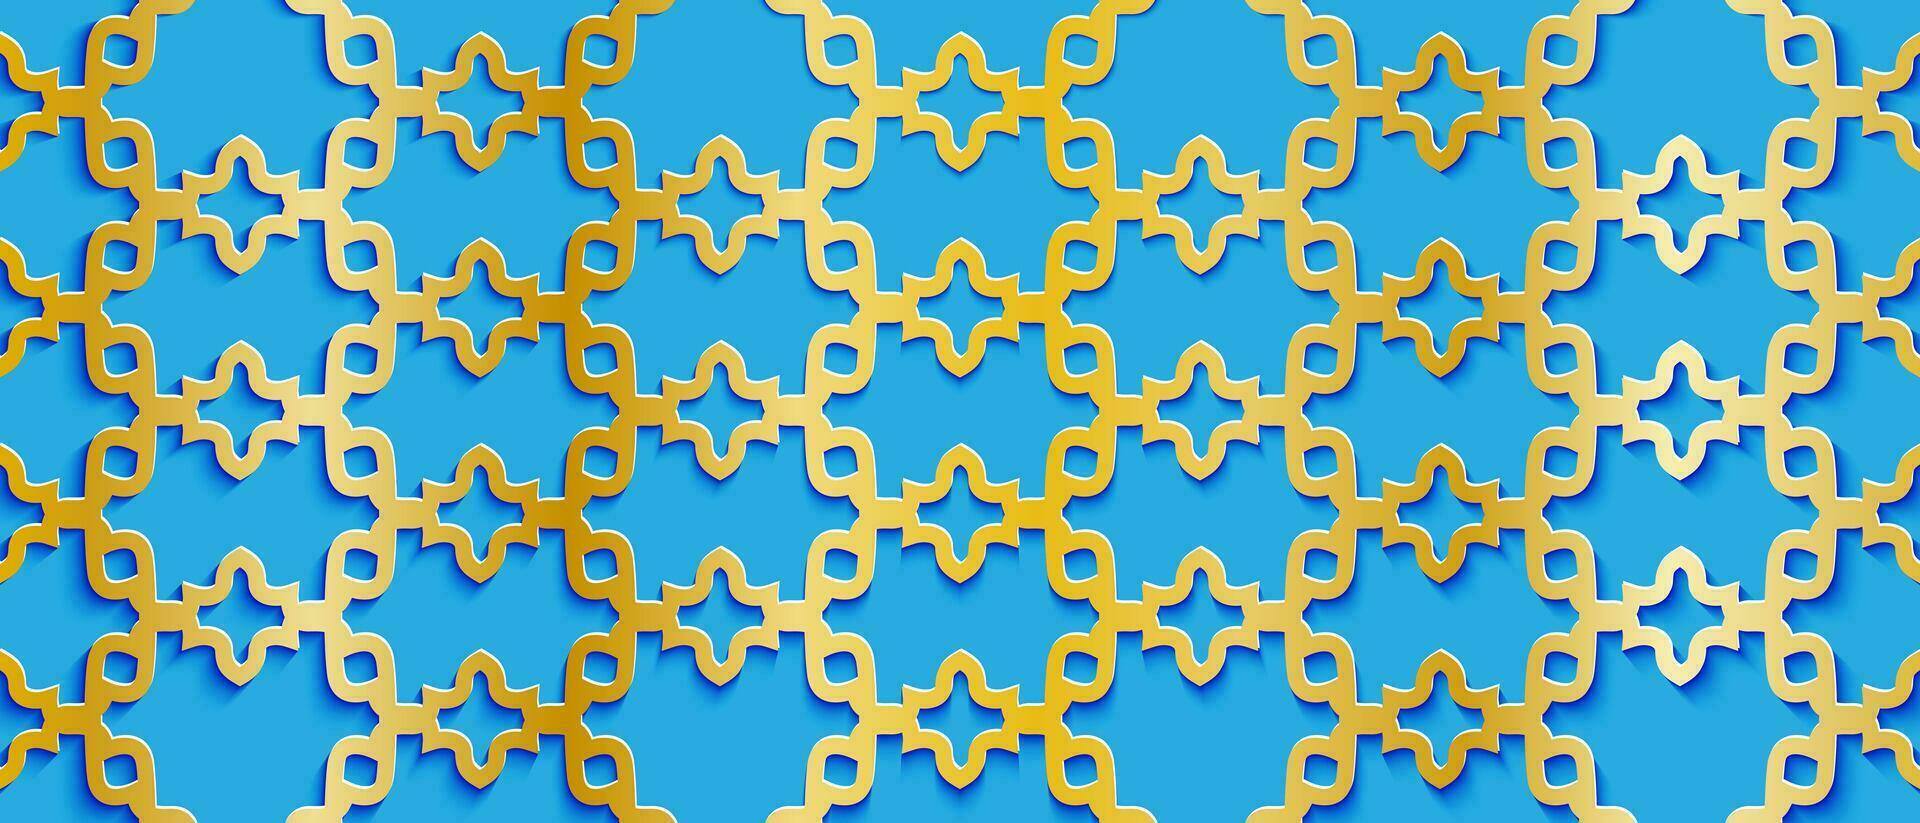 bakgrund med arabicum rik mönster. textur av gyllene islamic prydnad med skugga på en blå bakgrund. vektor illustration.